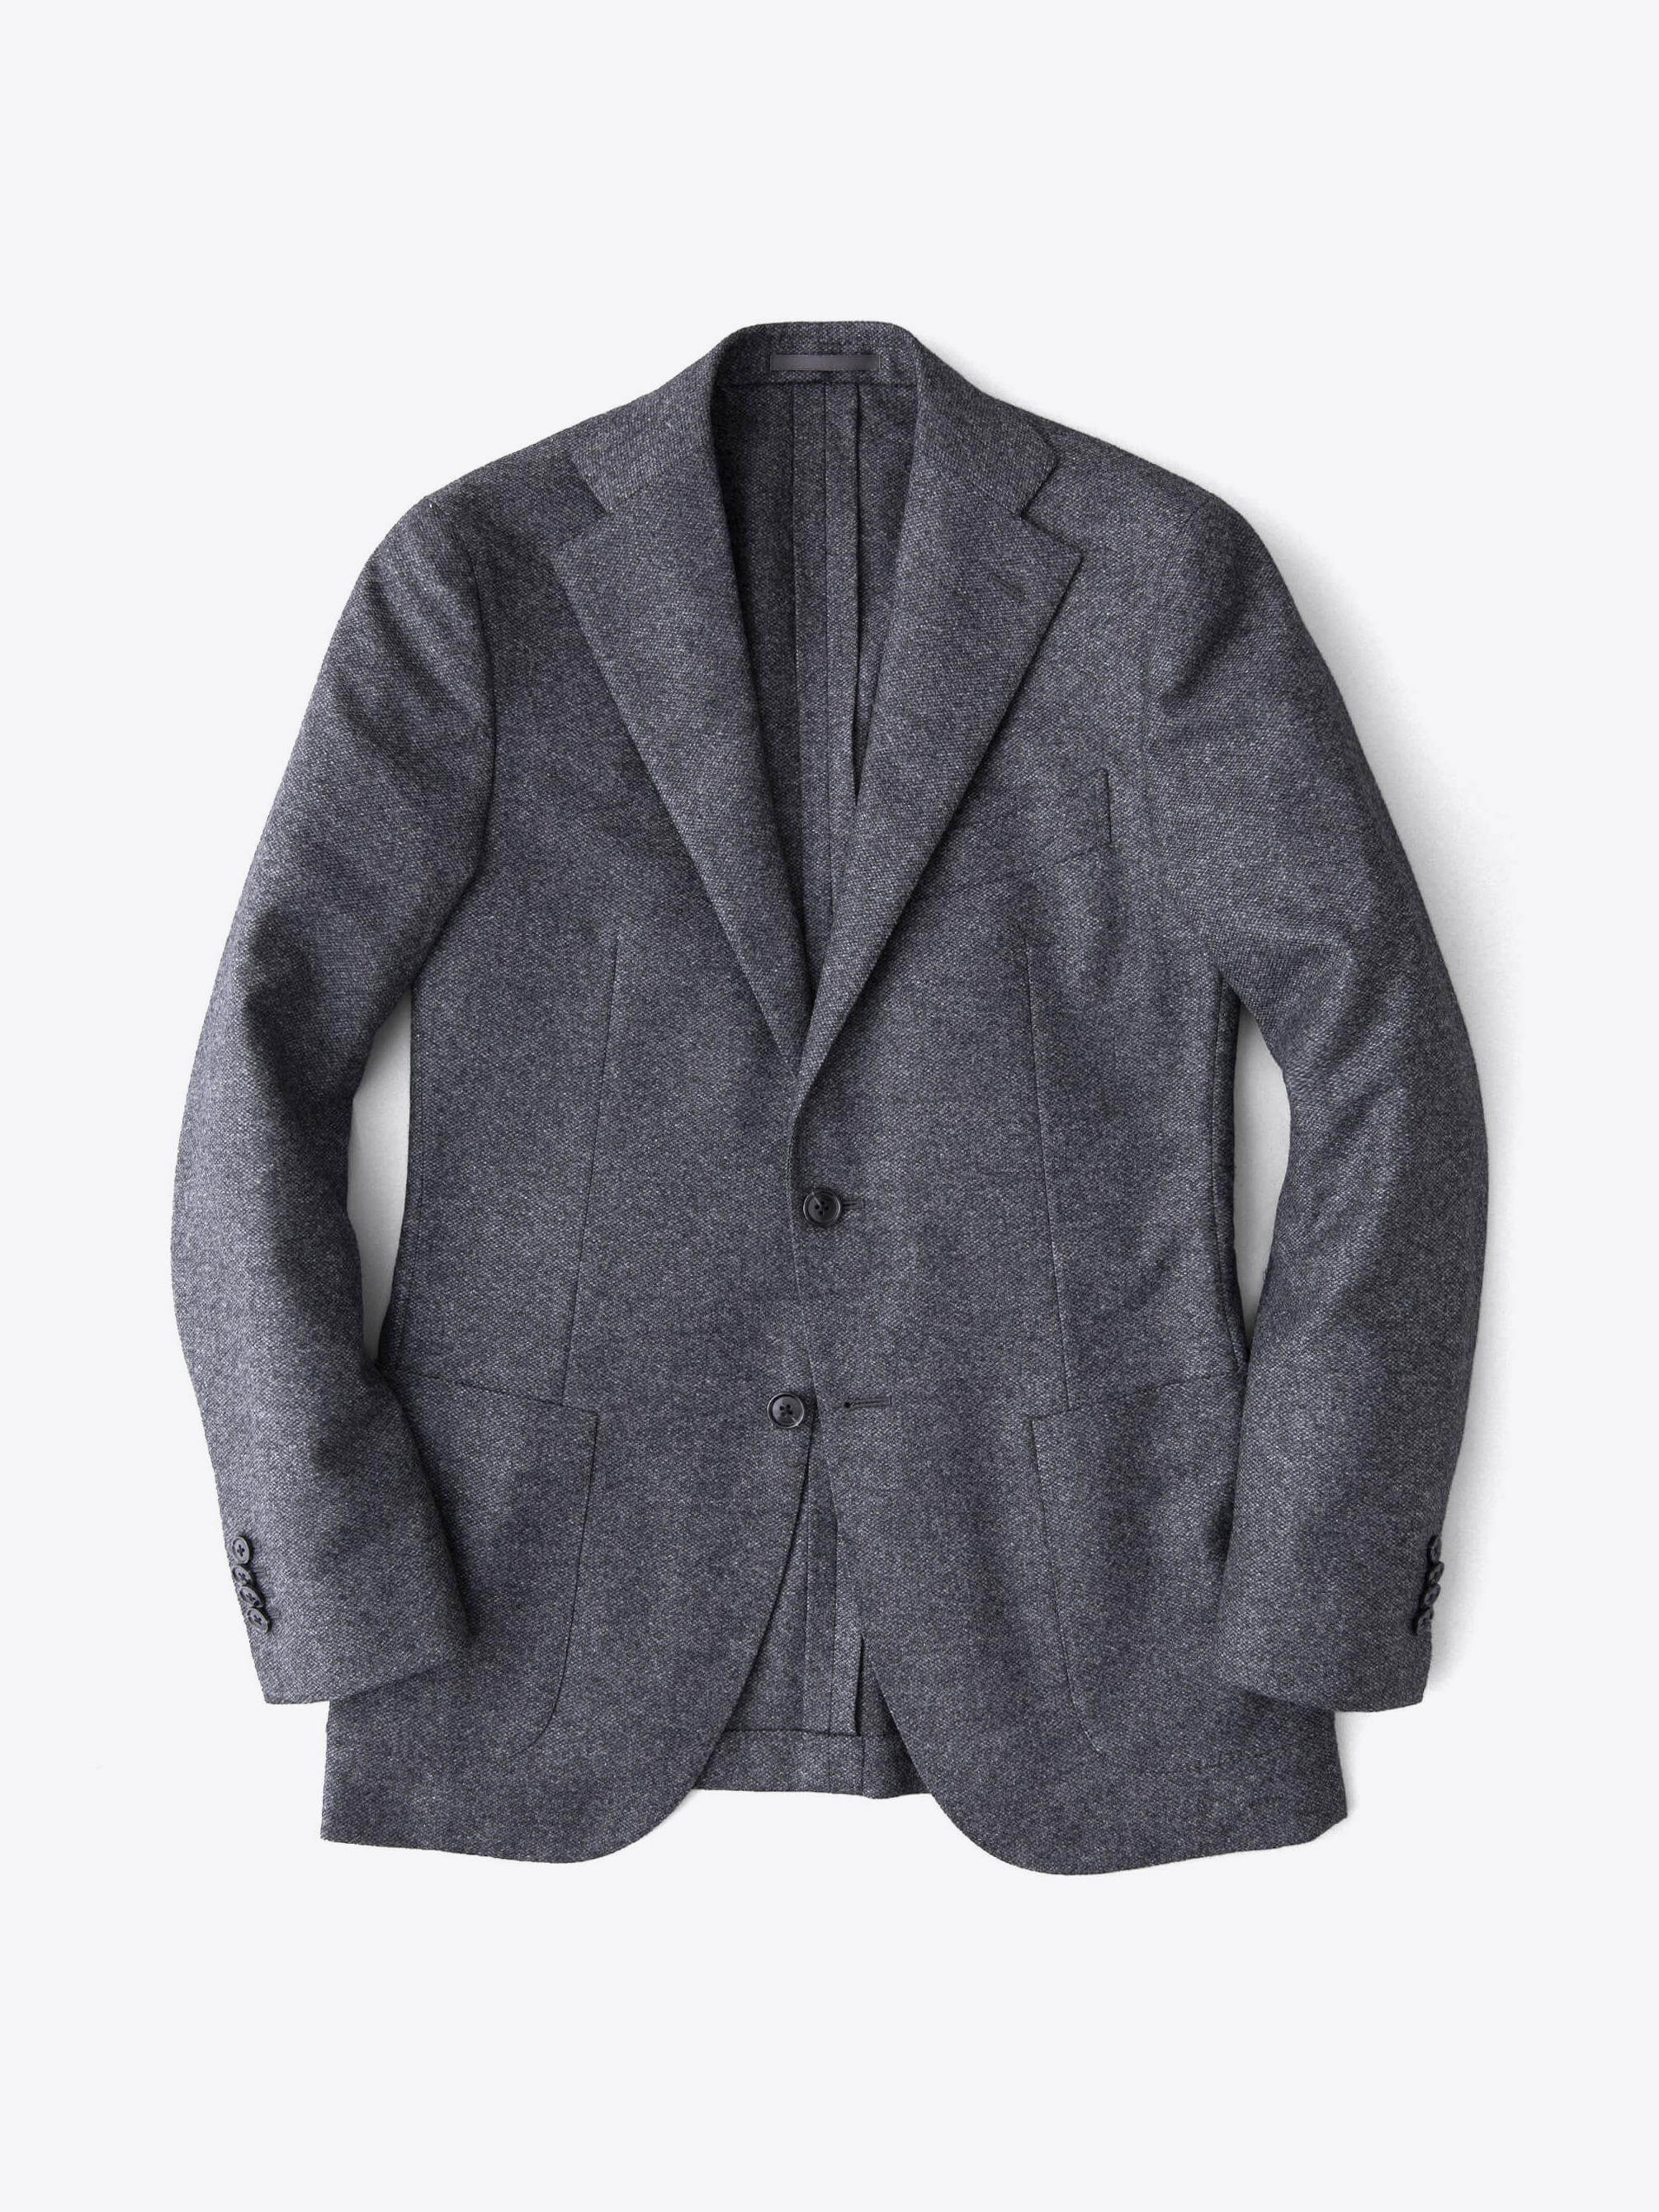 Zoom Image of Hudson Grey Birdseye Wool Flannel Jacket